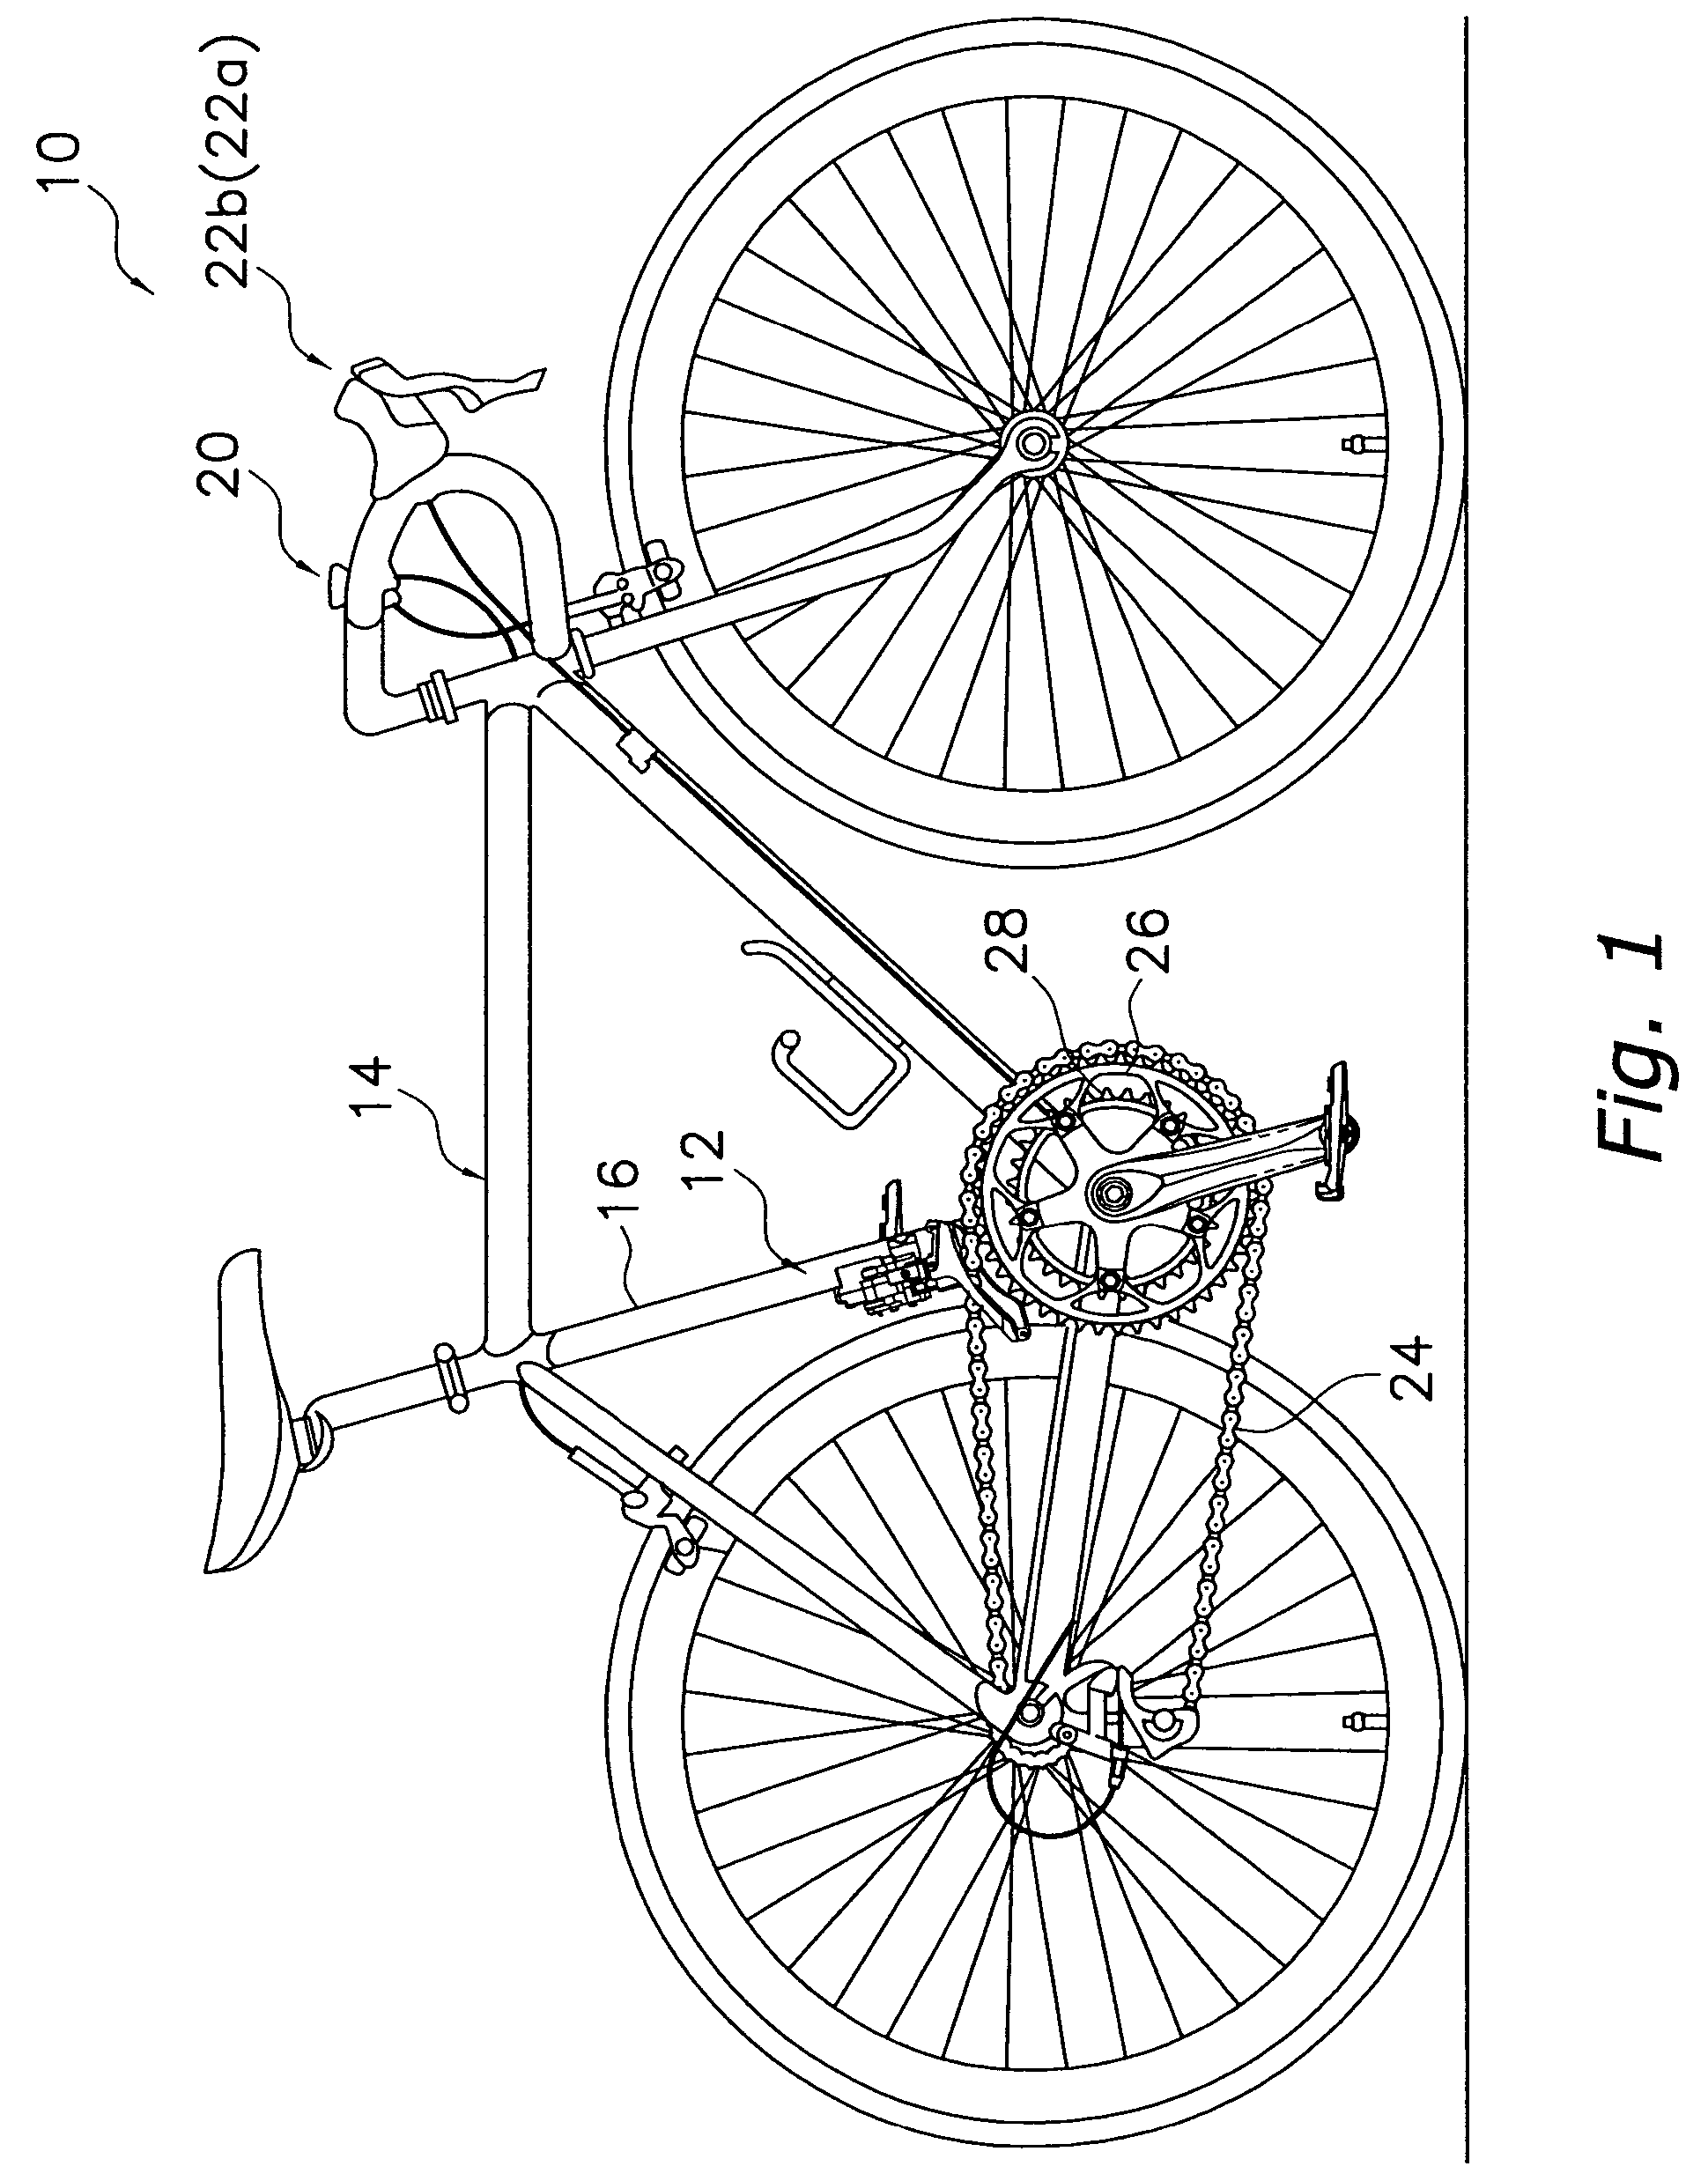 Bicycle derailleur motor unit assembly